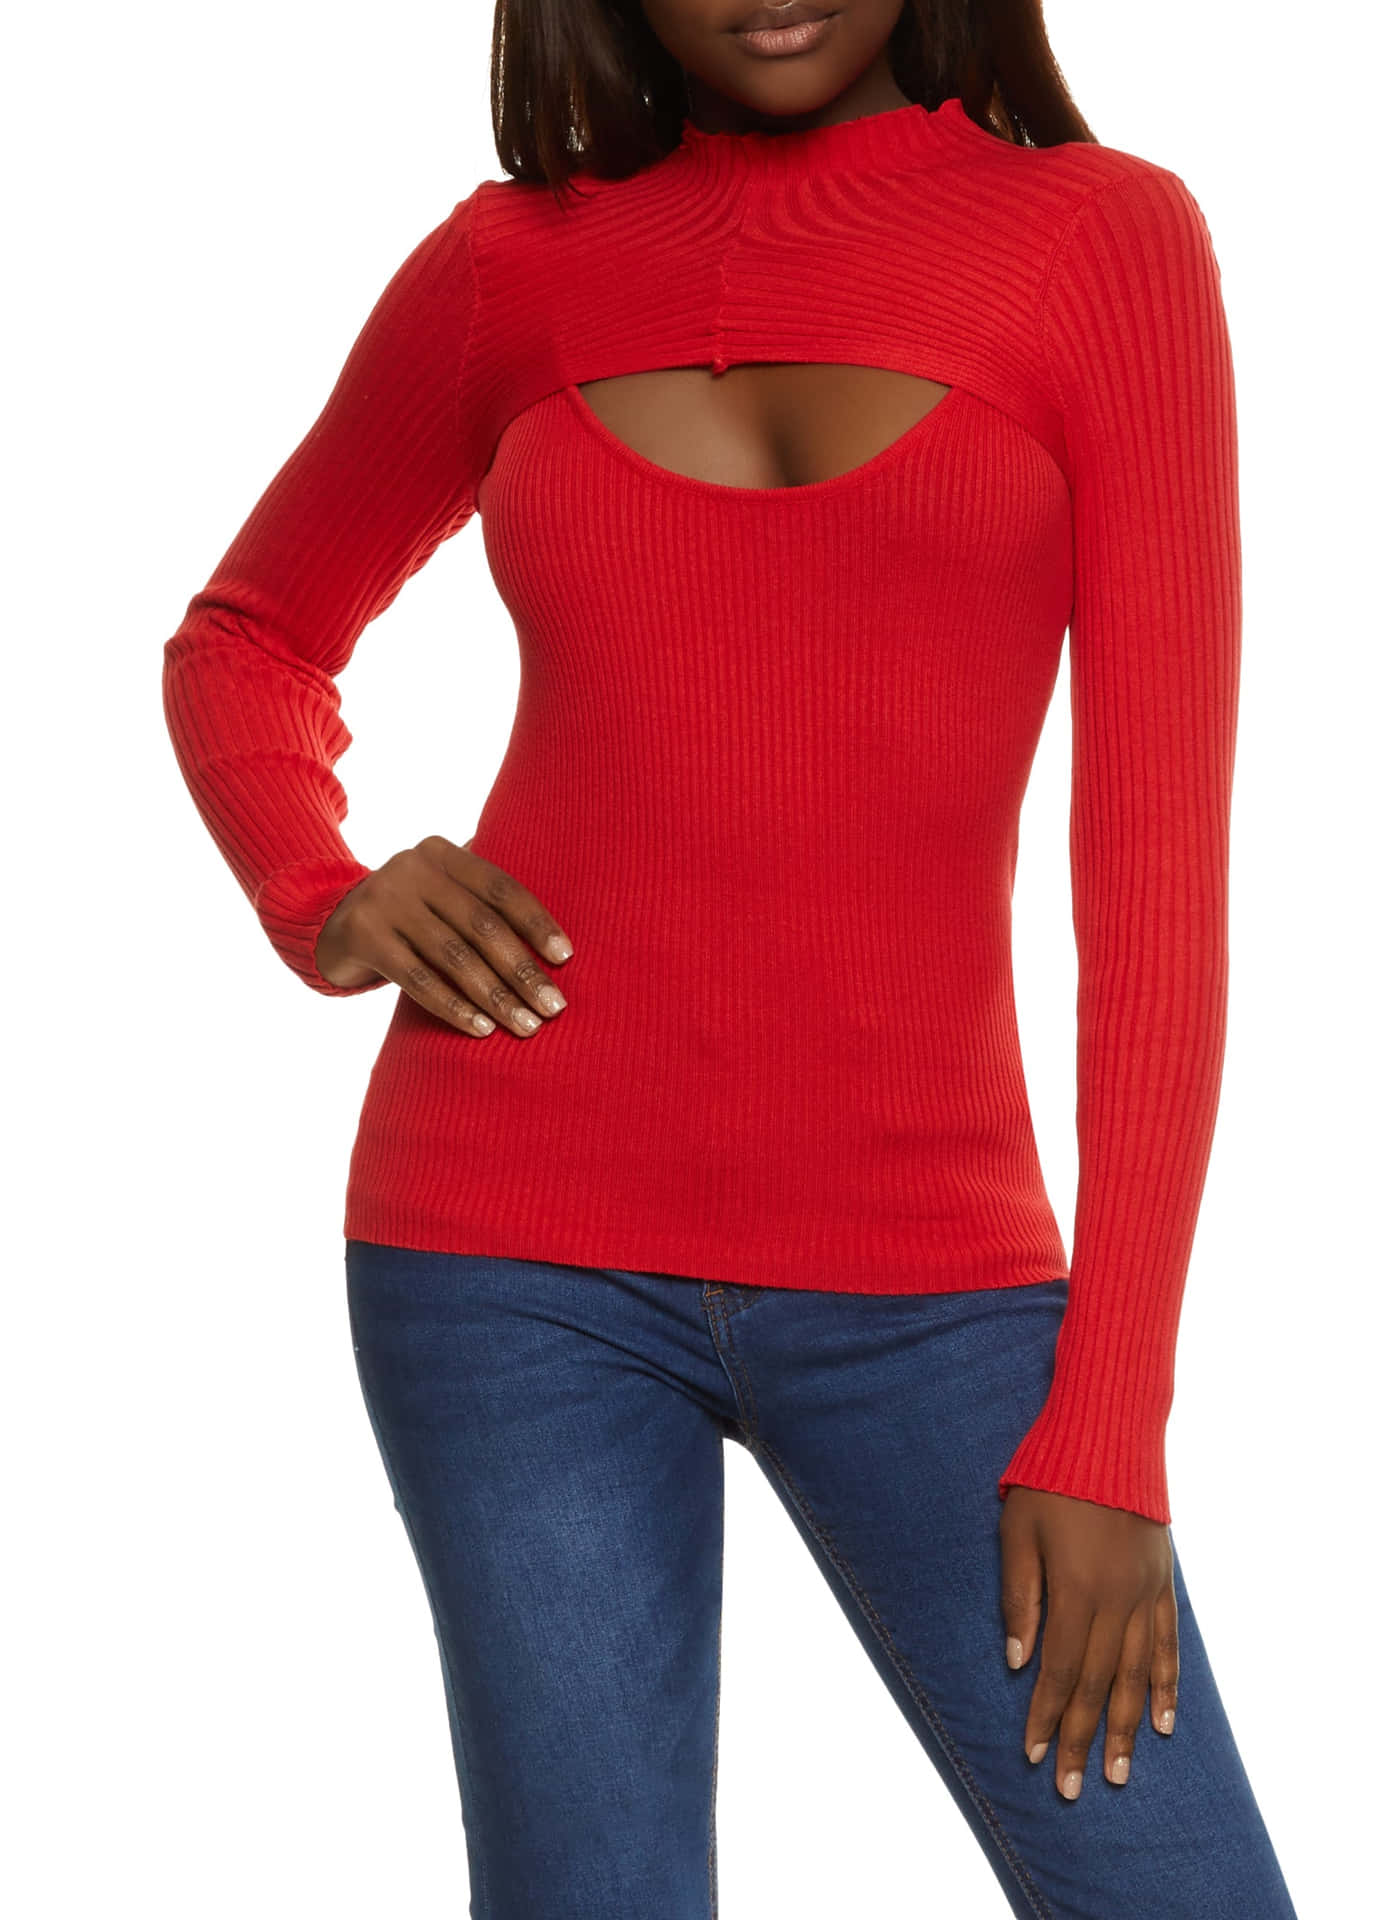 Woman in elegant red sweater Wallpaper